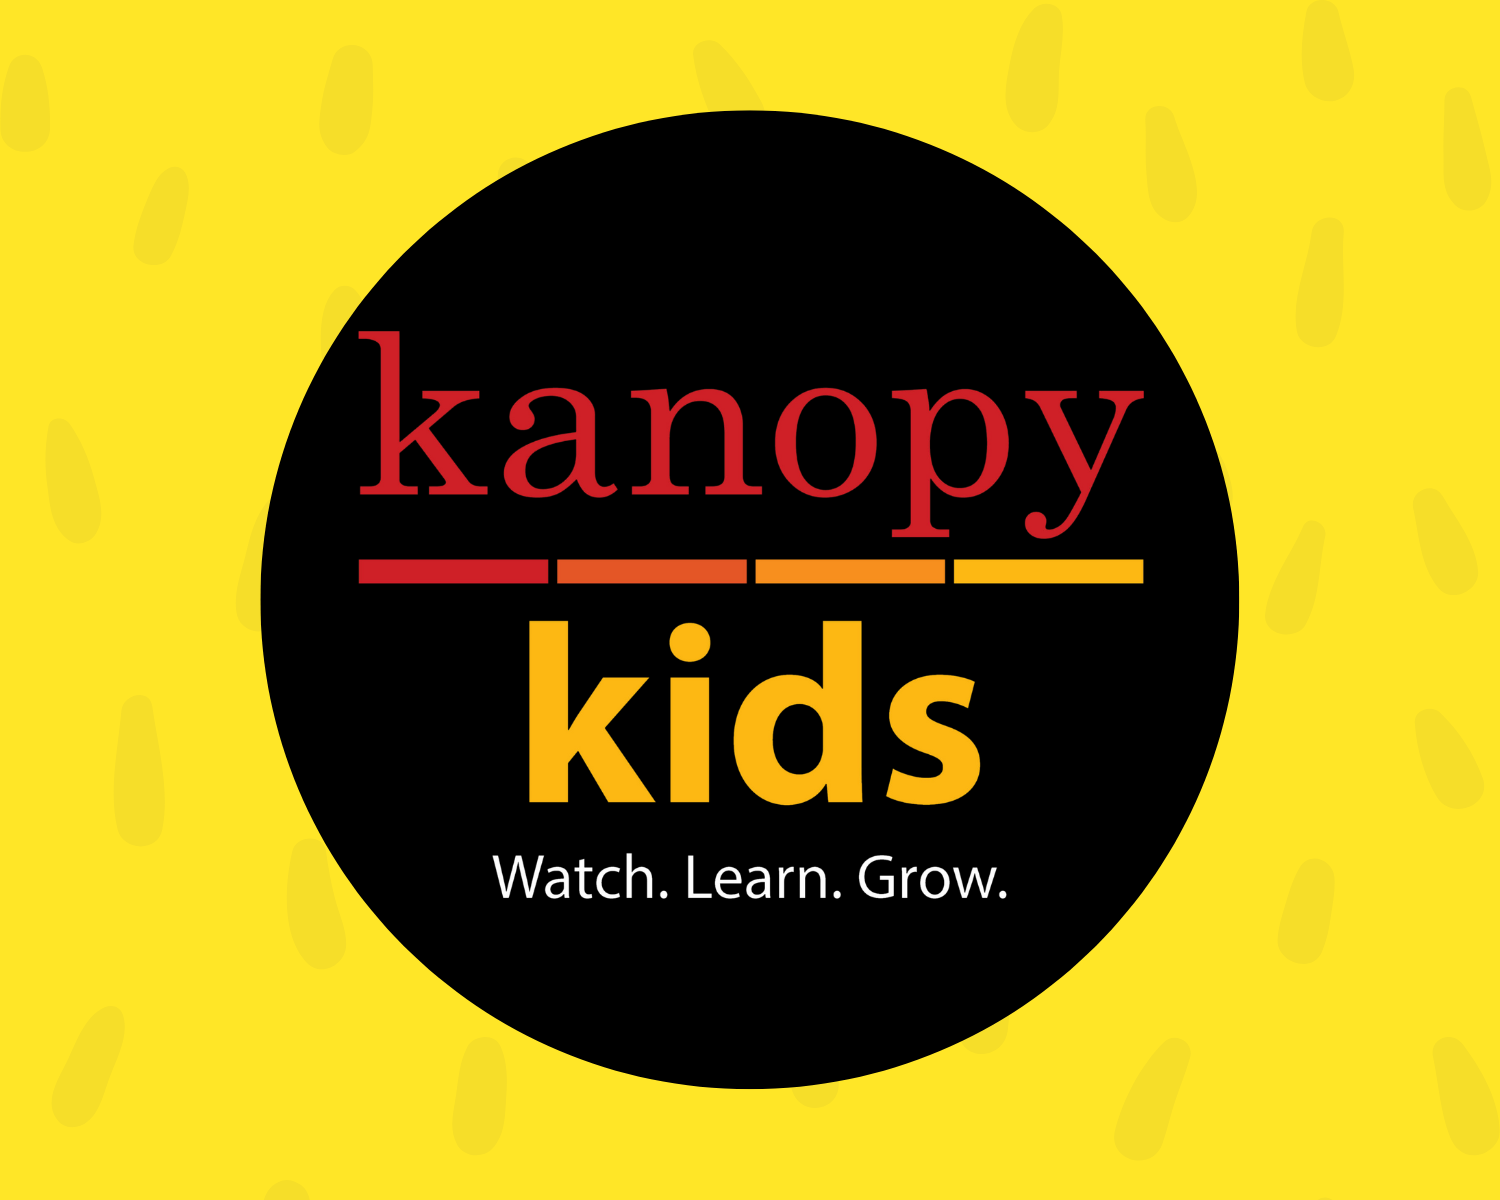 Kanopy Kids. Watch. Learn. Grow